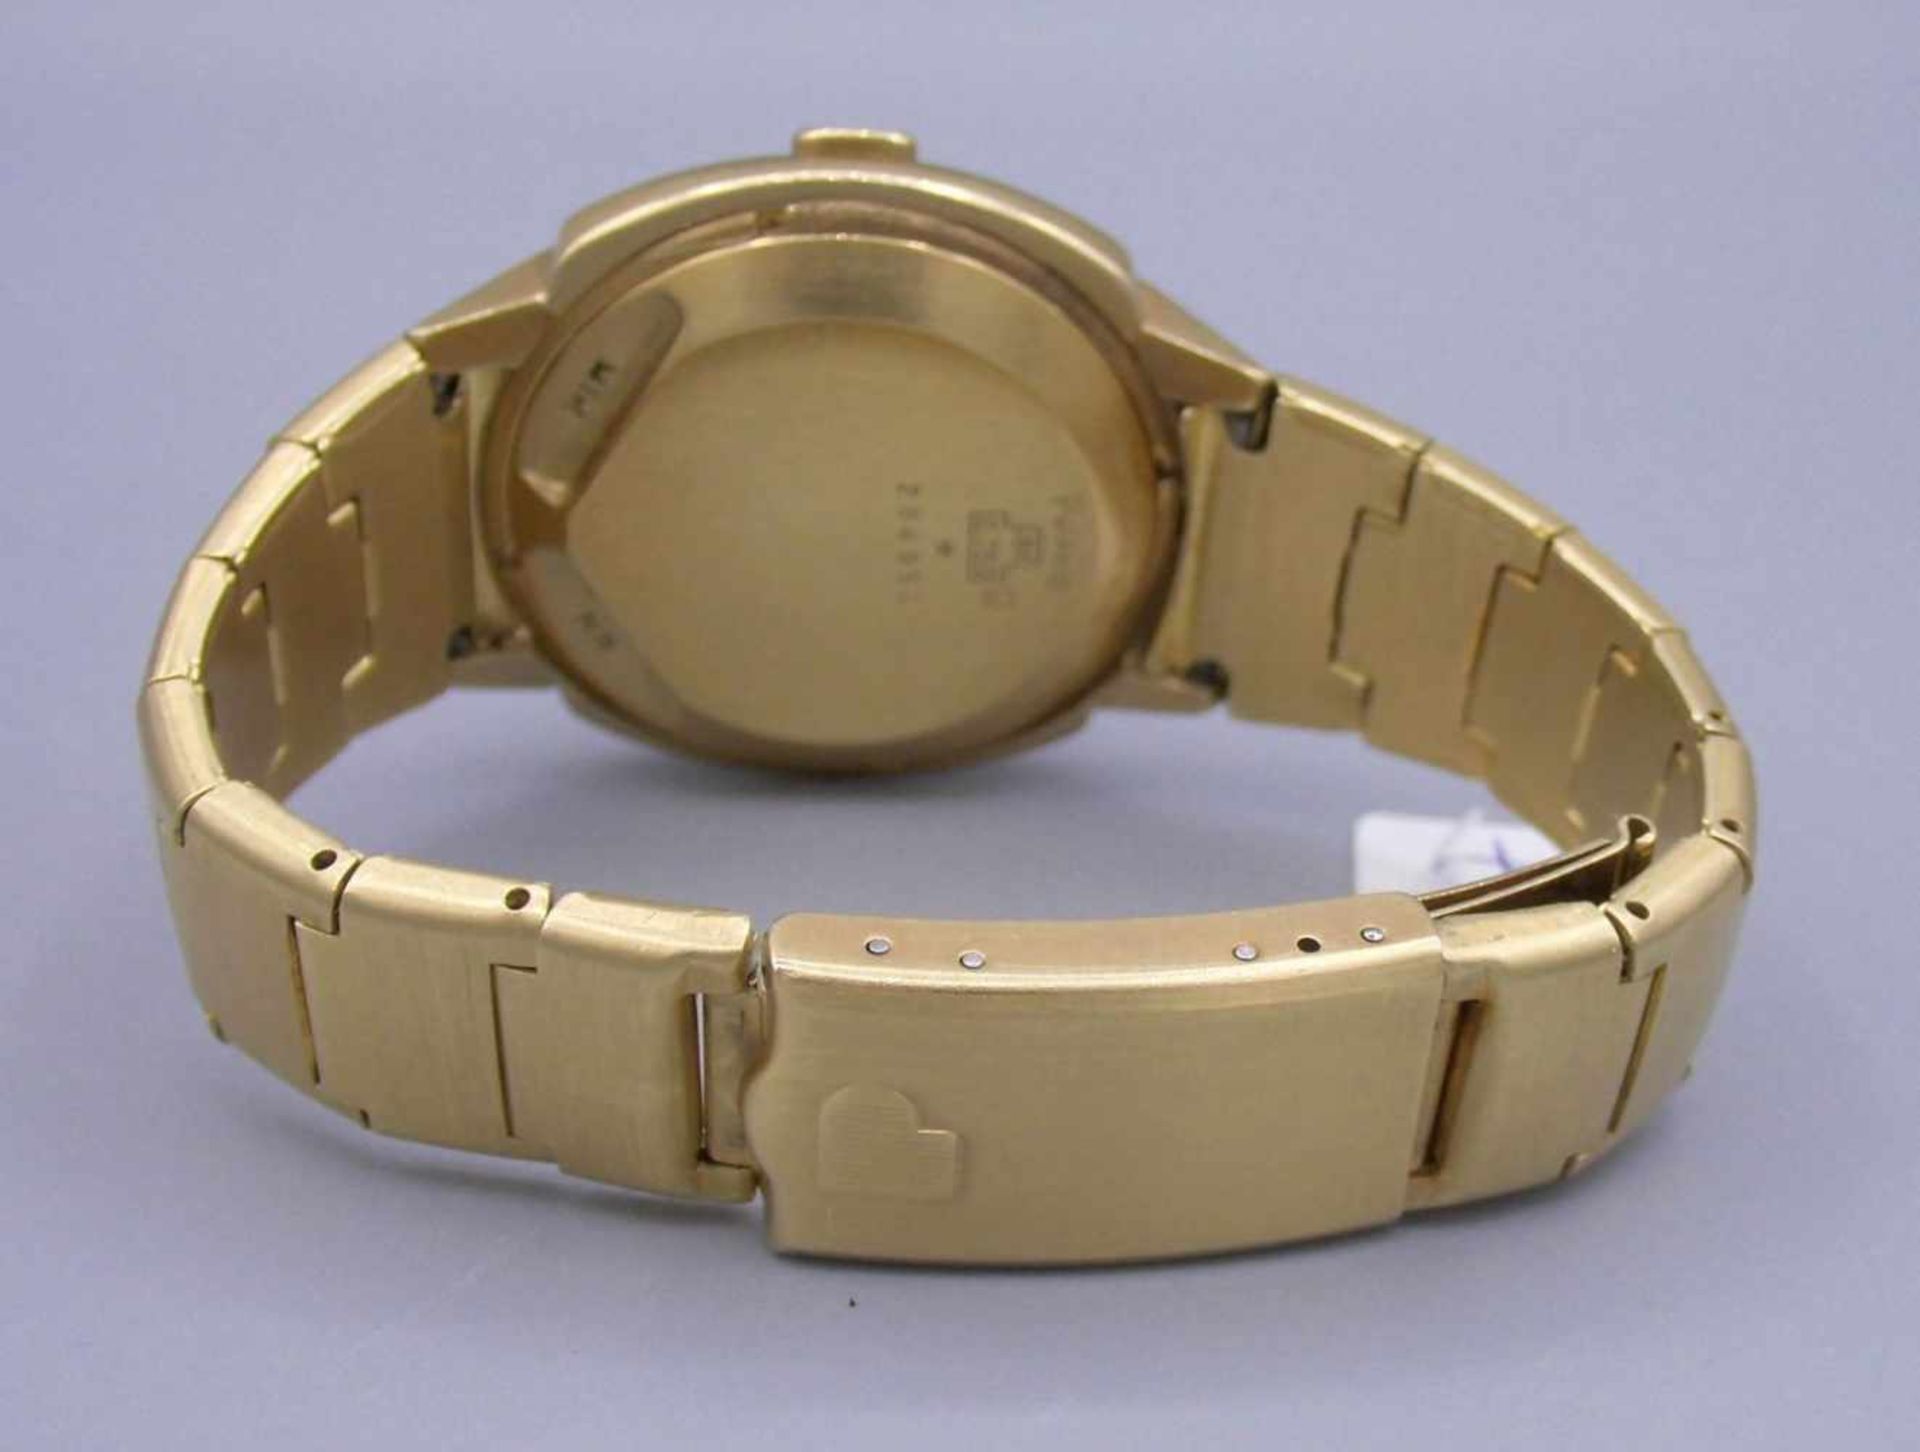 GOLDENE ARMBANDUHR / DIGITALUHR : Pulsar P3 "Date Command" / digital watch, 1970er Jahre, Gehäuse - Image 4 of 7